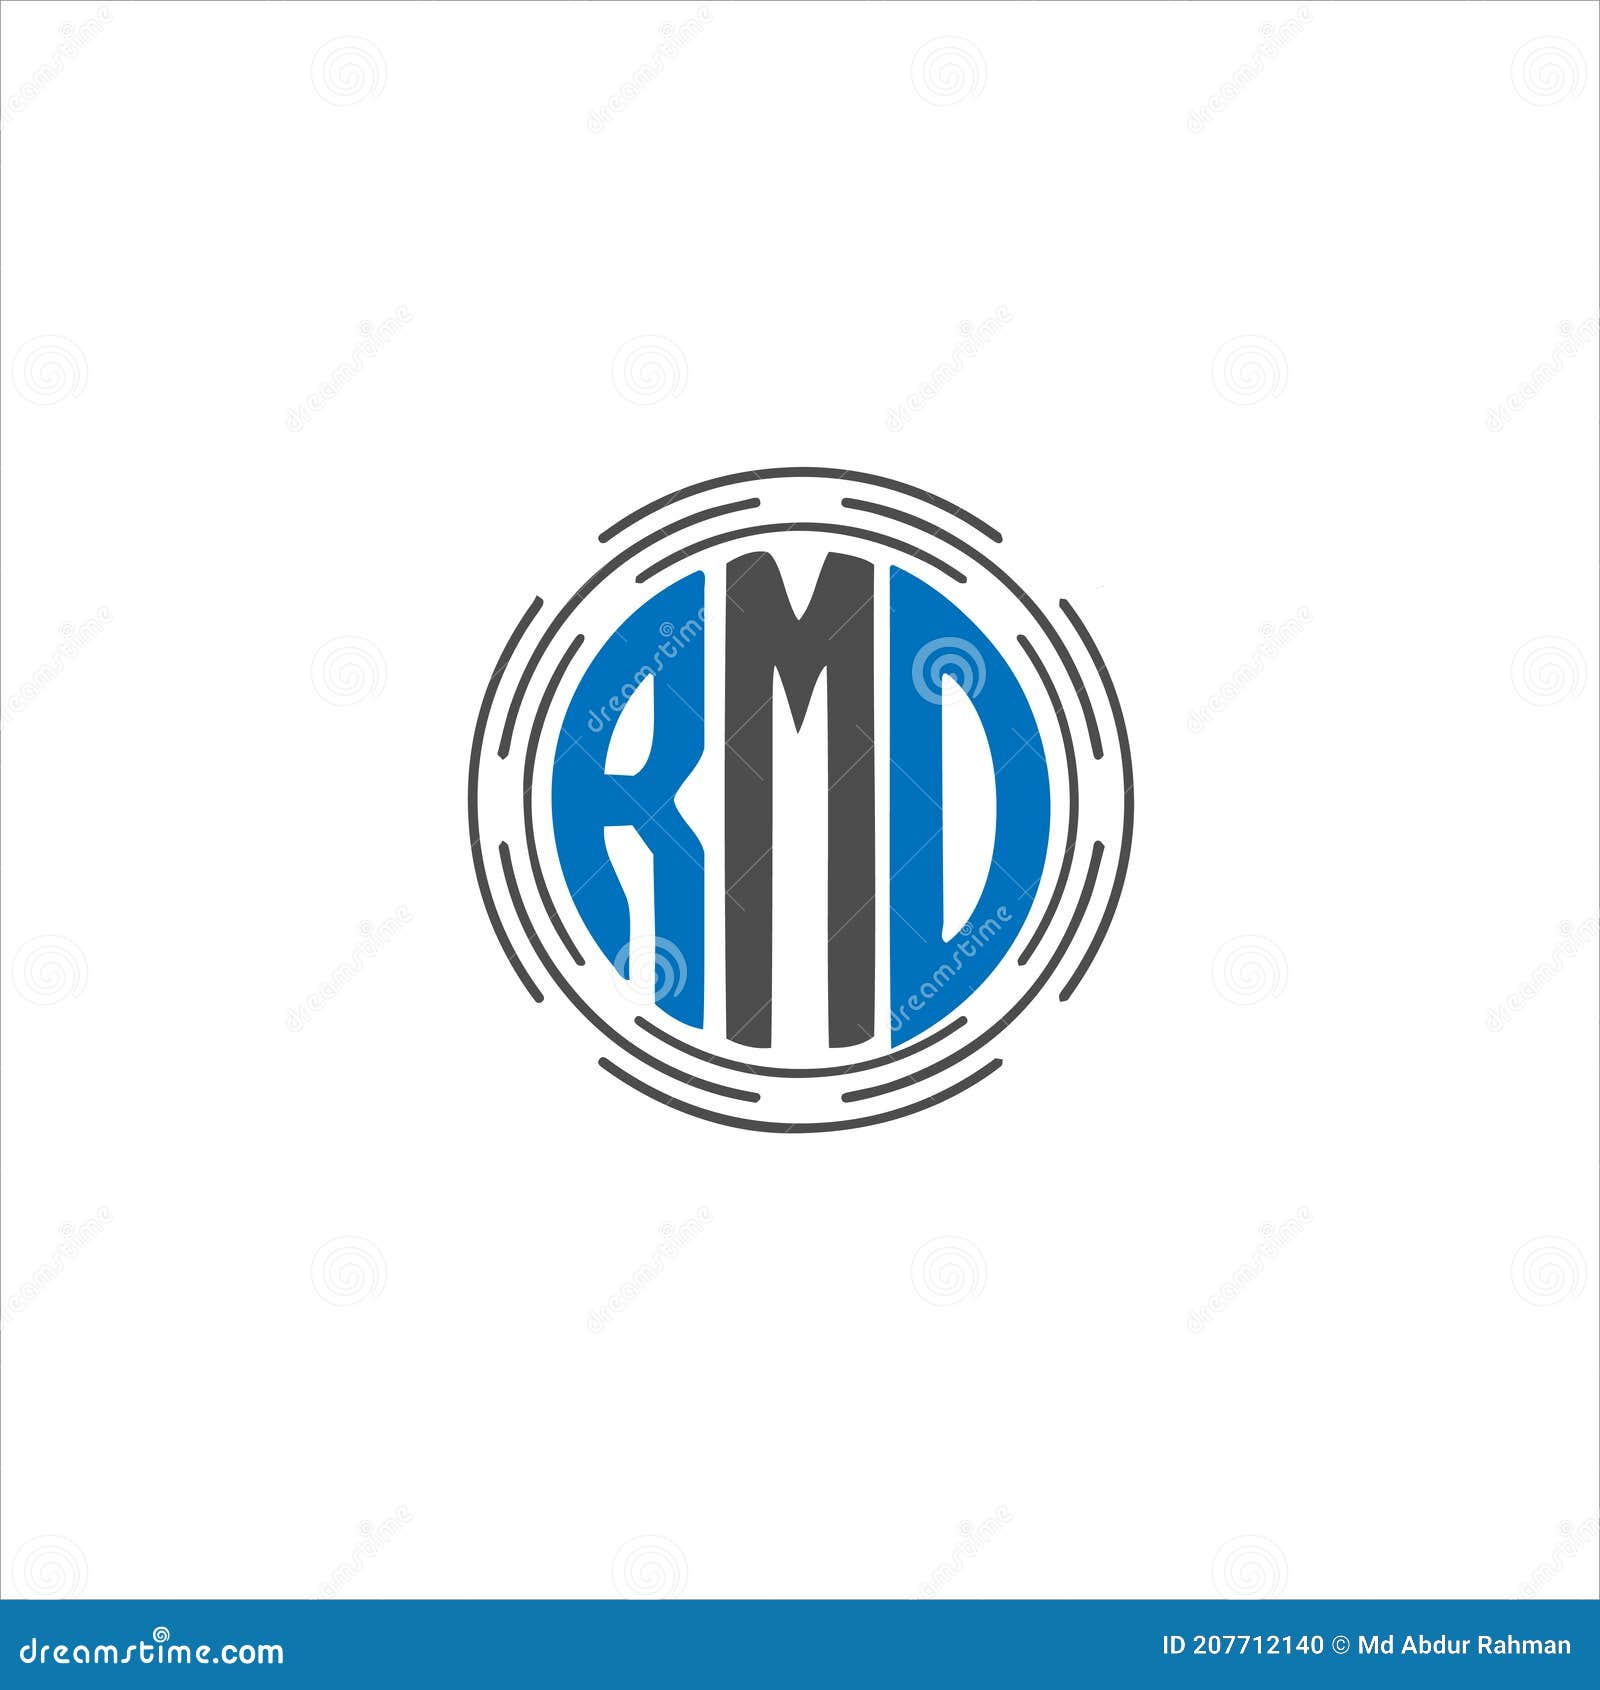 rmd unique abstract geometric logo 